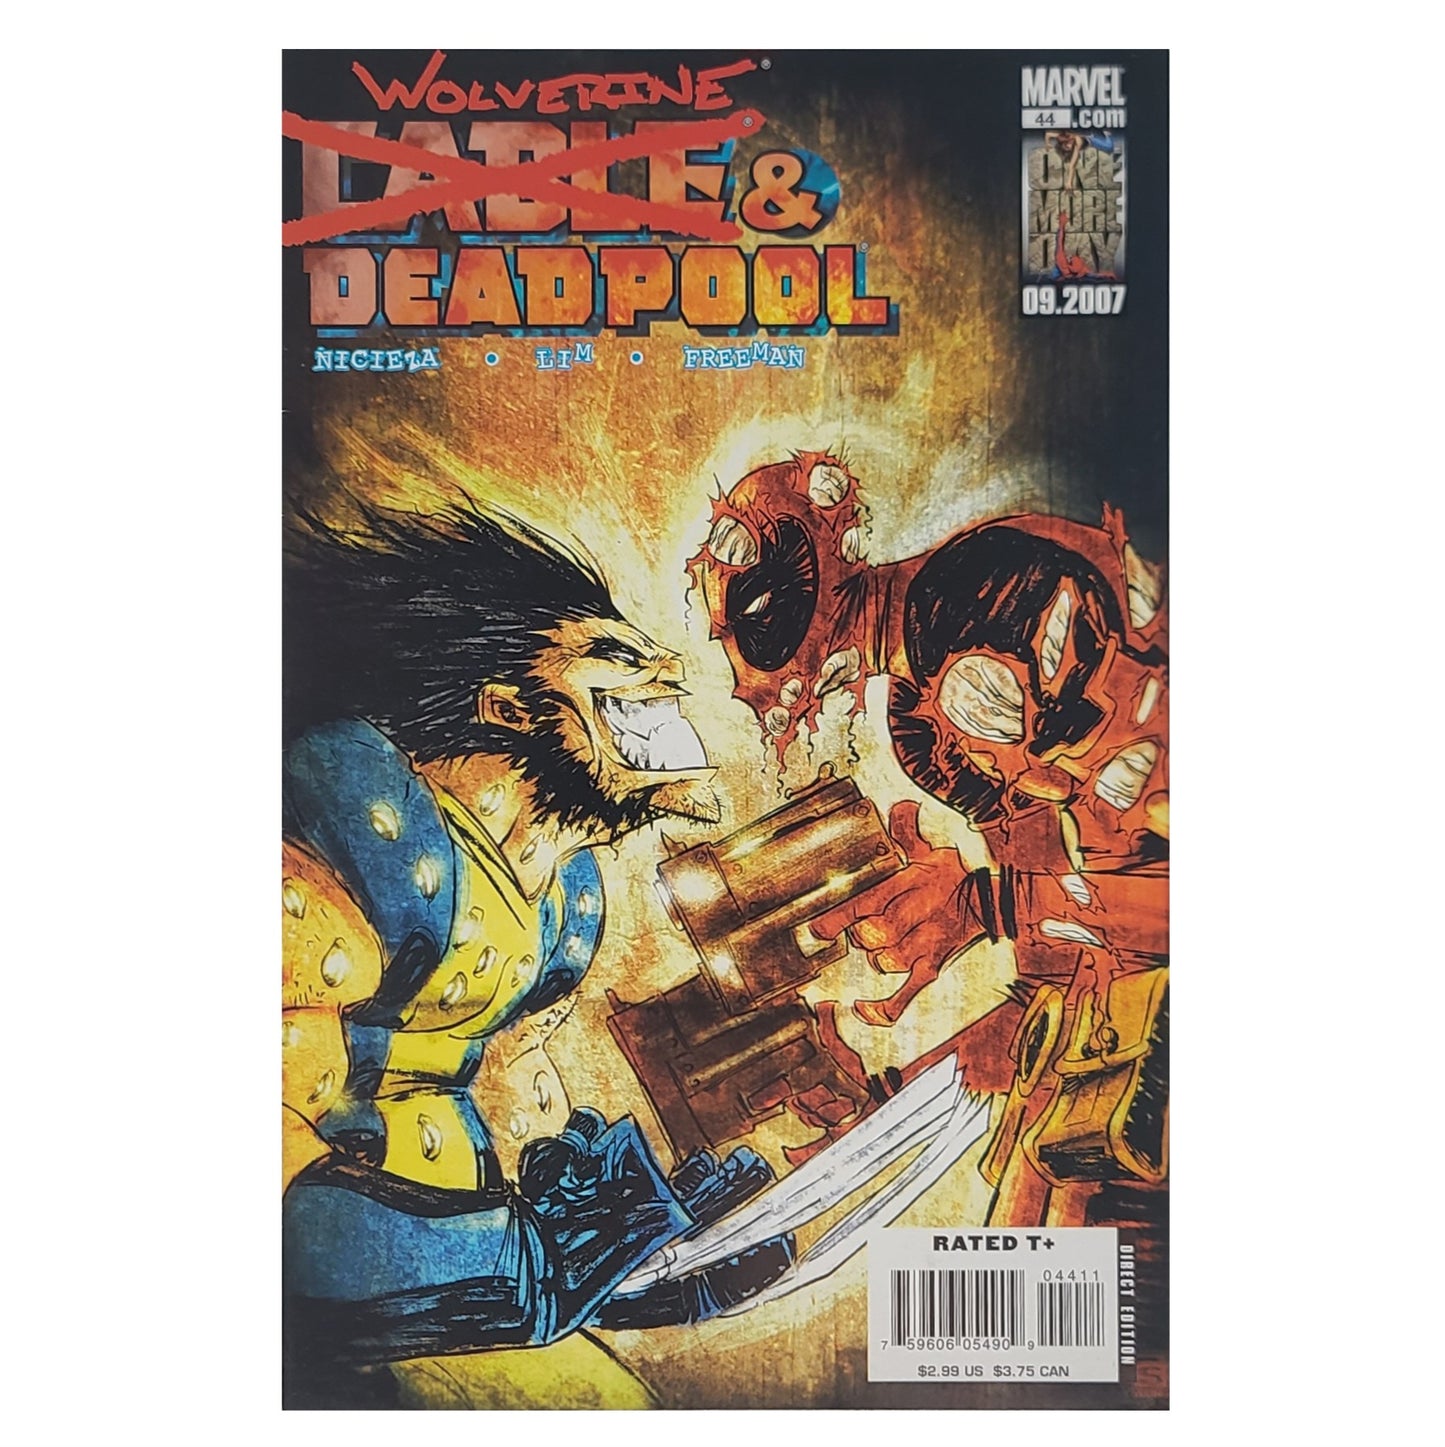 Cable & Deadpool #44 (2007)